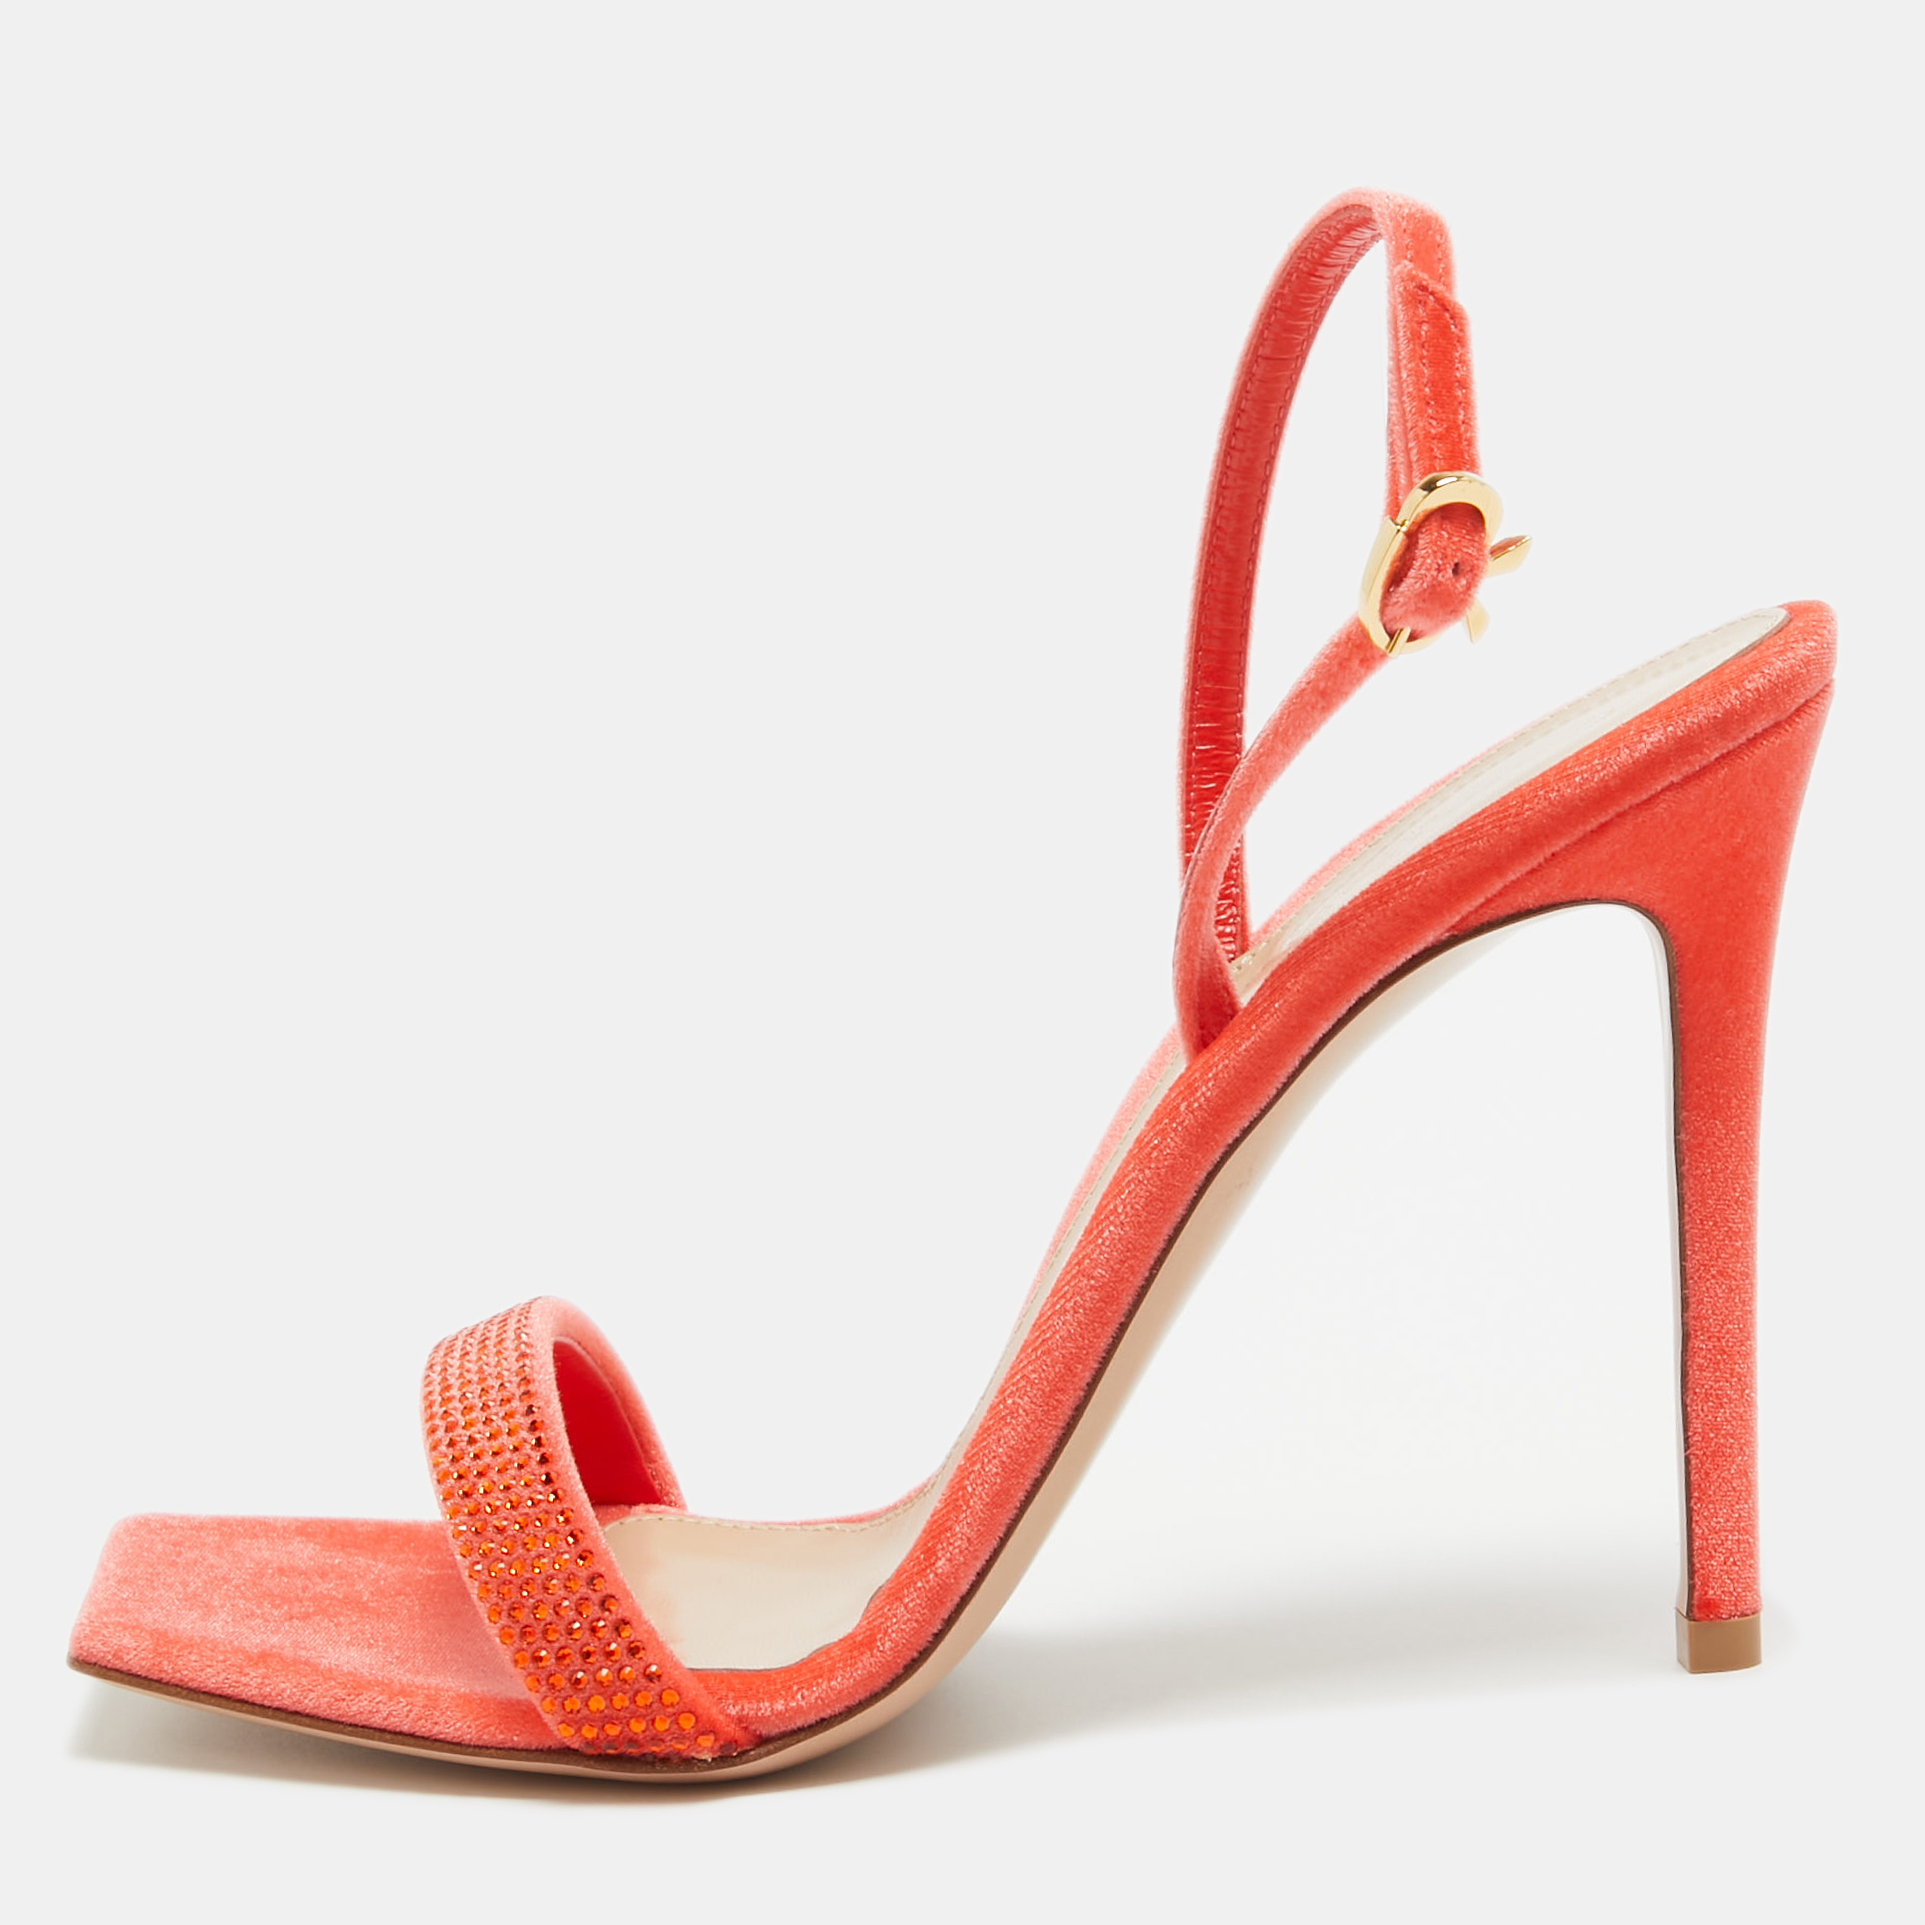 Gianvito rossi poppy red velvet embellished britney sandals size 39.5